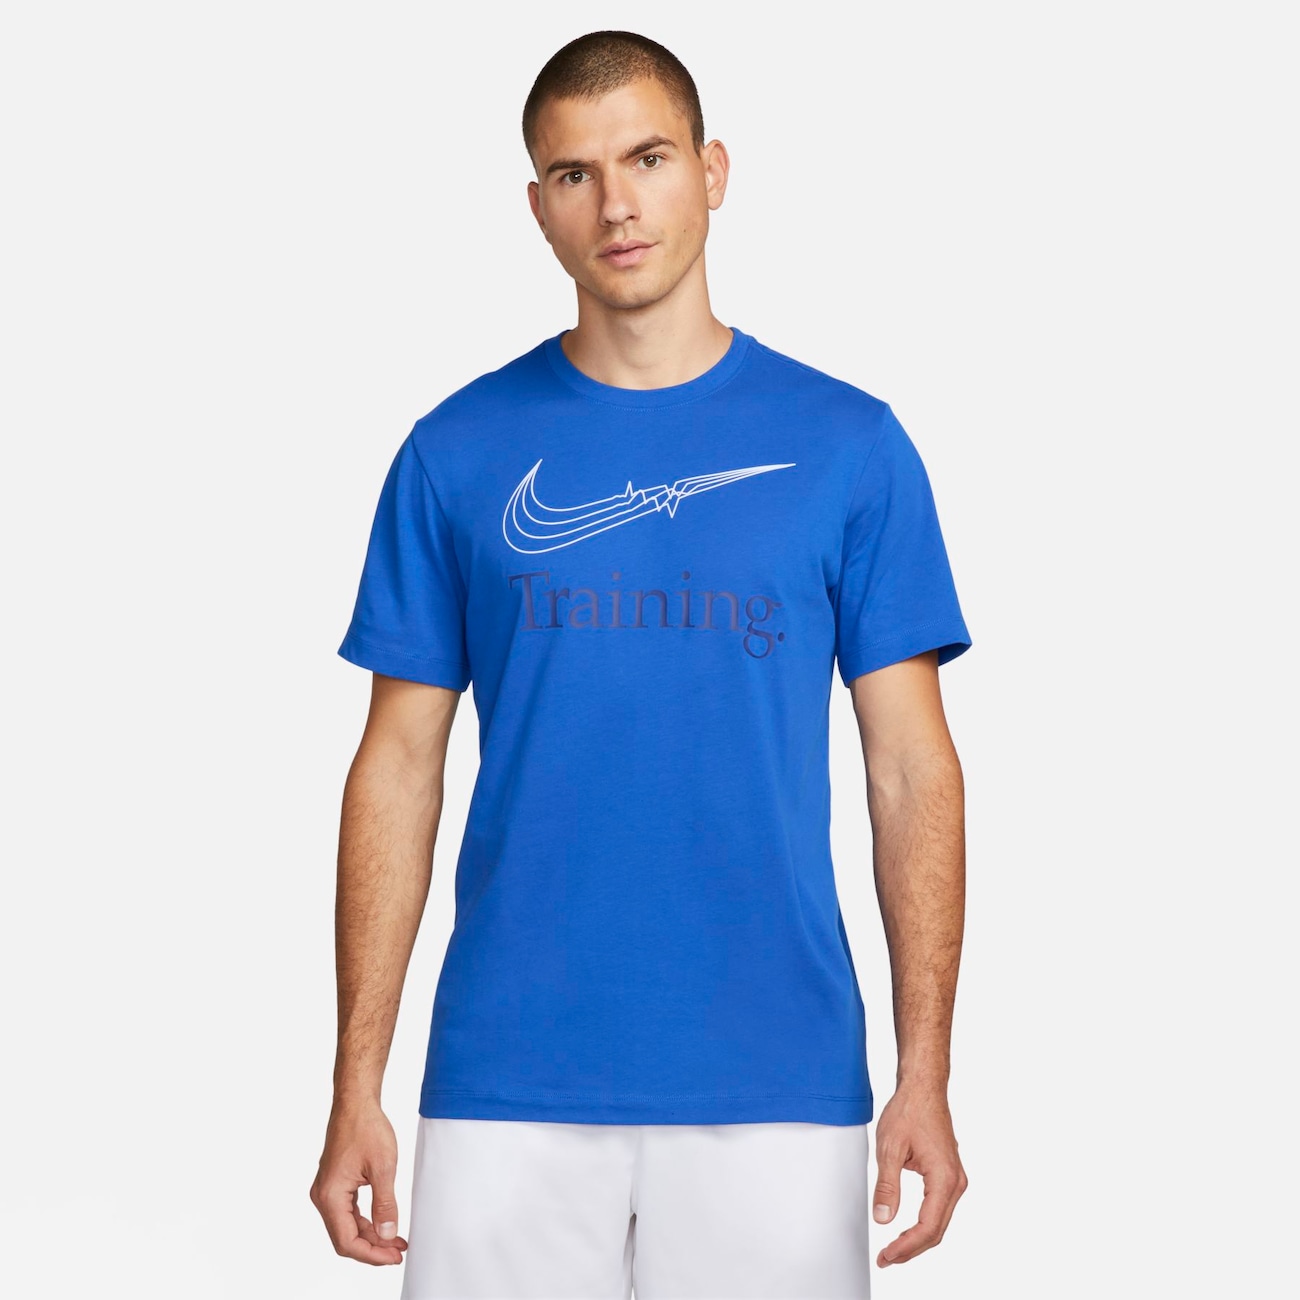 Camiseta Nike Dri-FIT Masculina